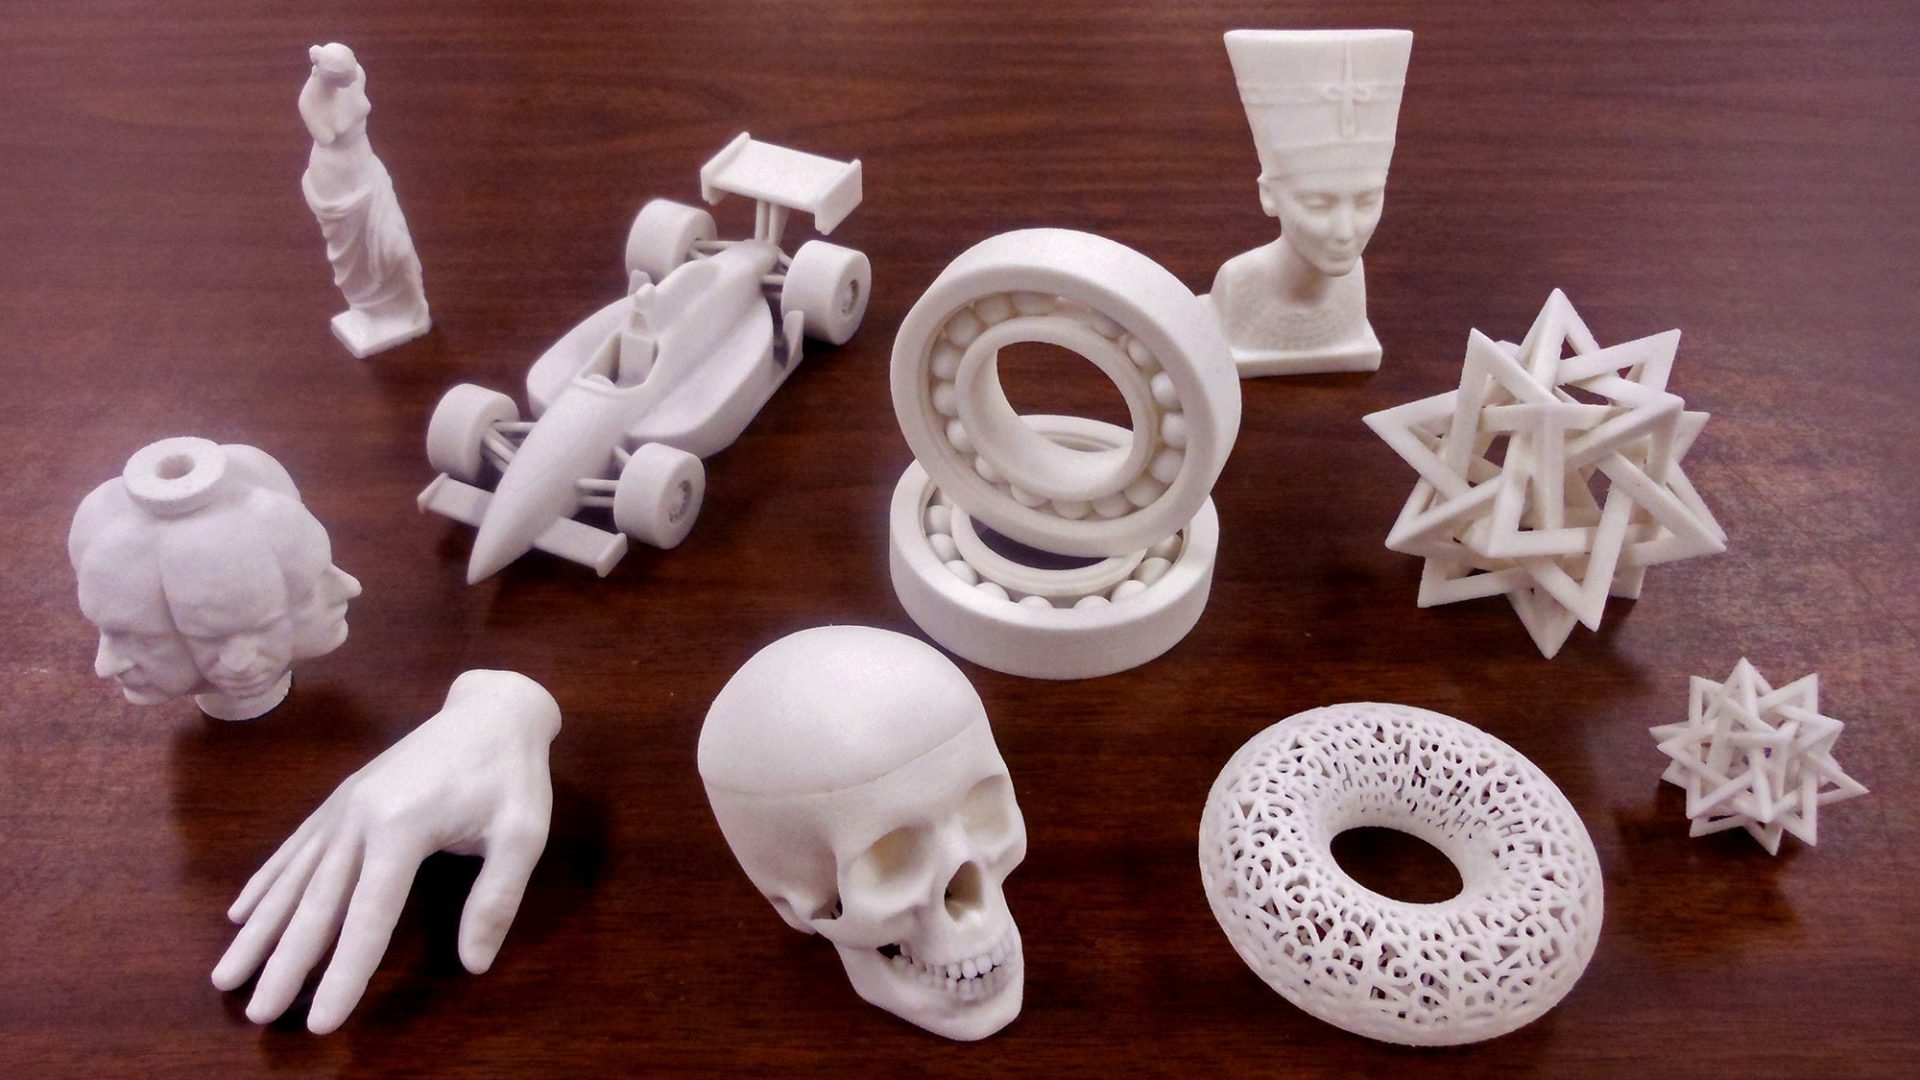 random-3d-printed-objects-hand-skull-car-e1440601530281-1920x1080.jpeg